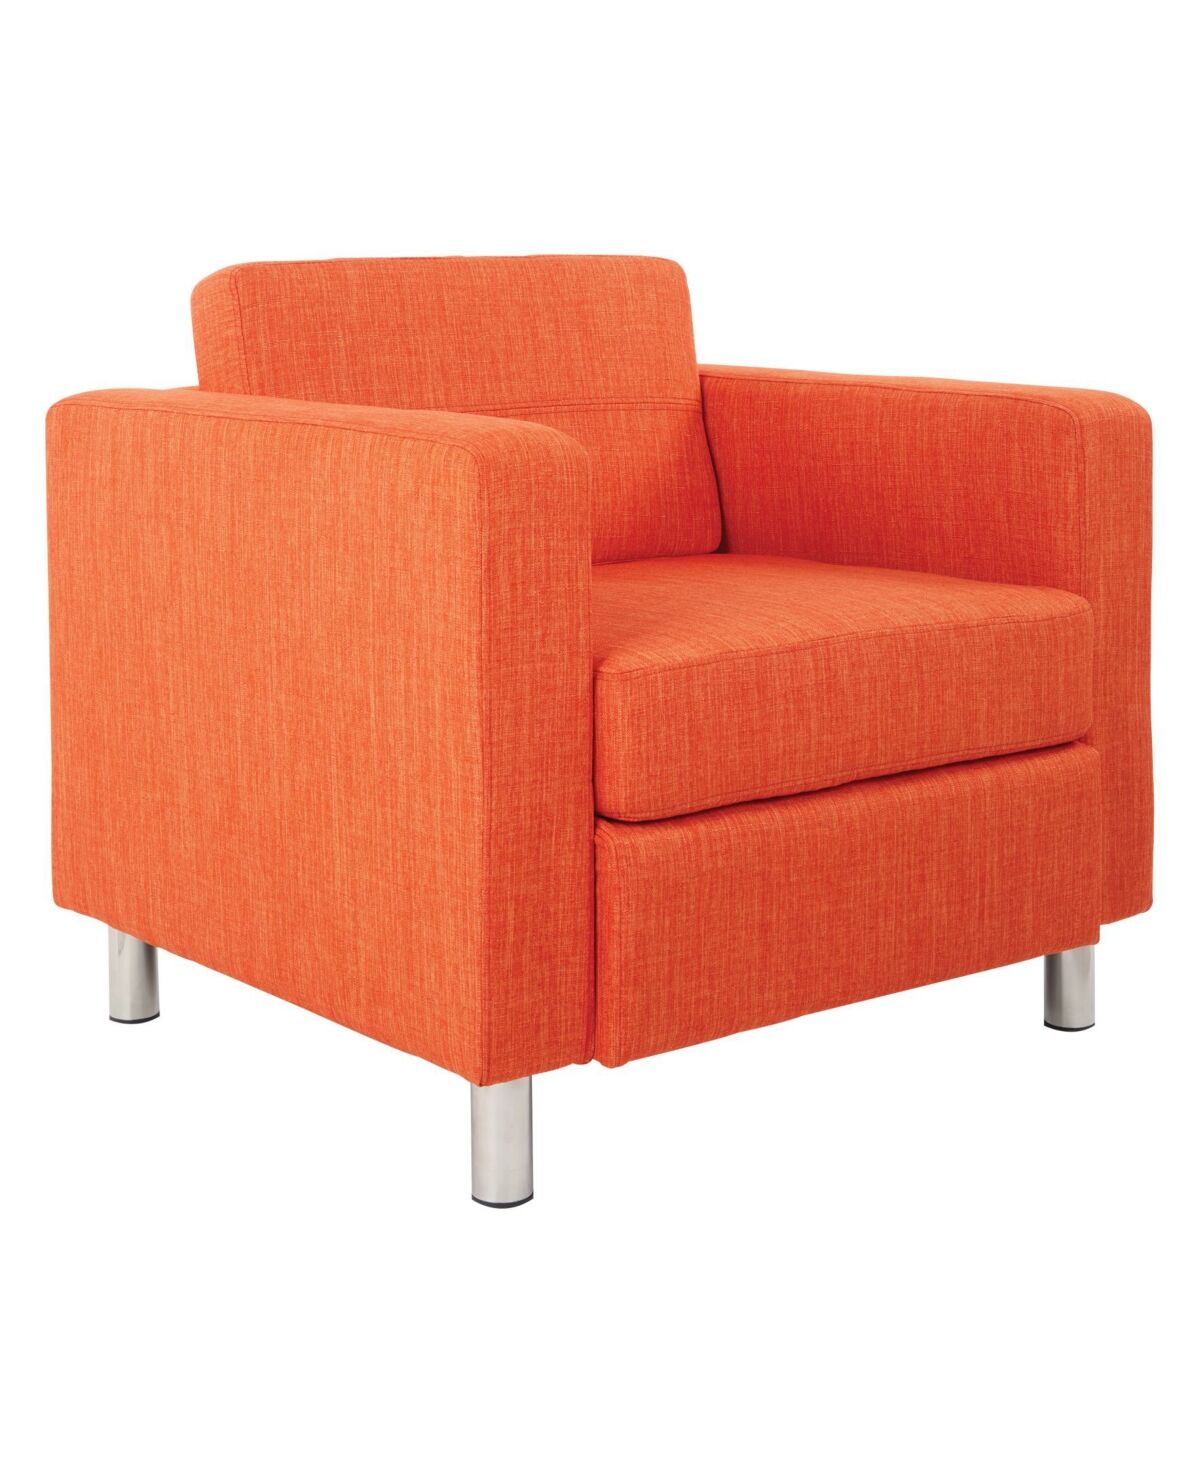 Office Star Pacific Arm Chair - Tangerine